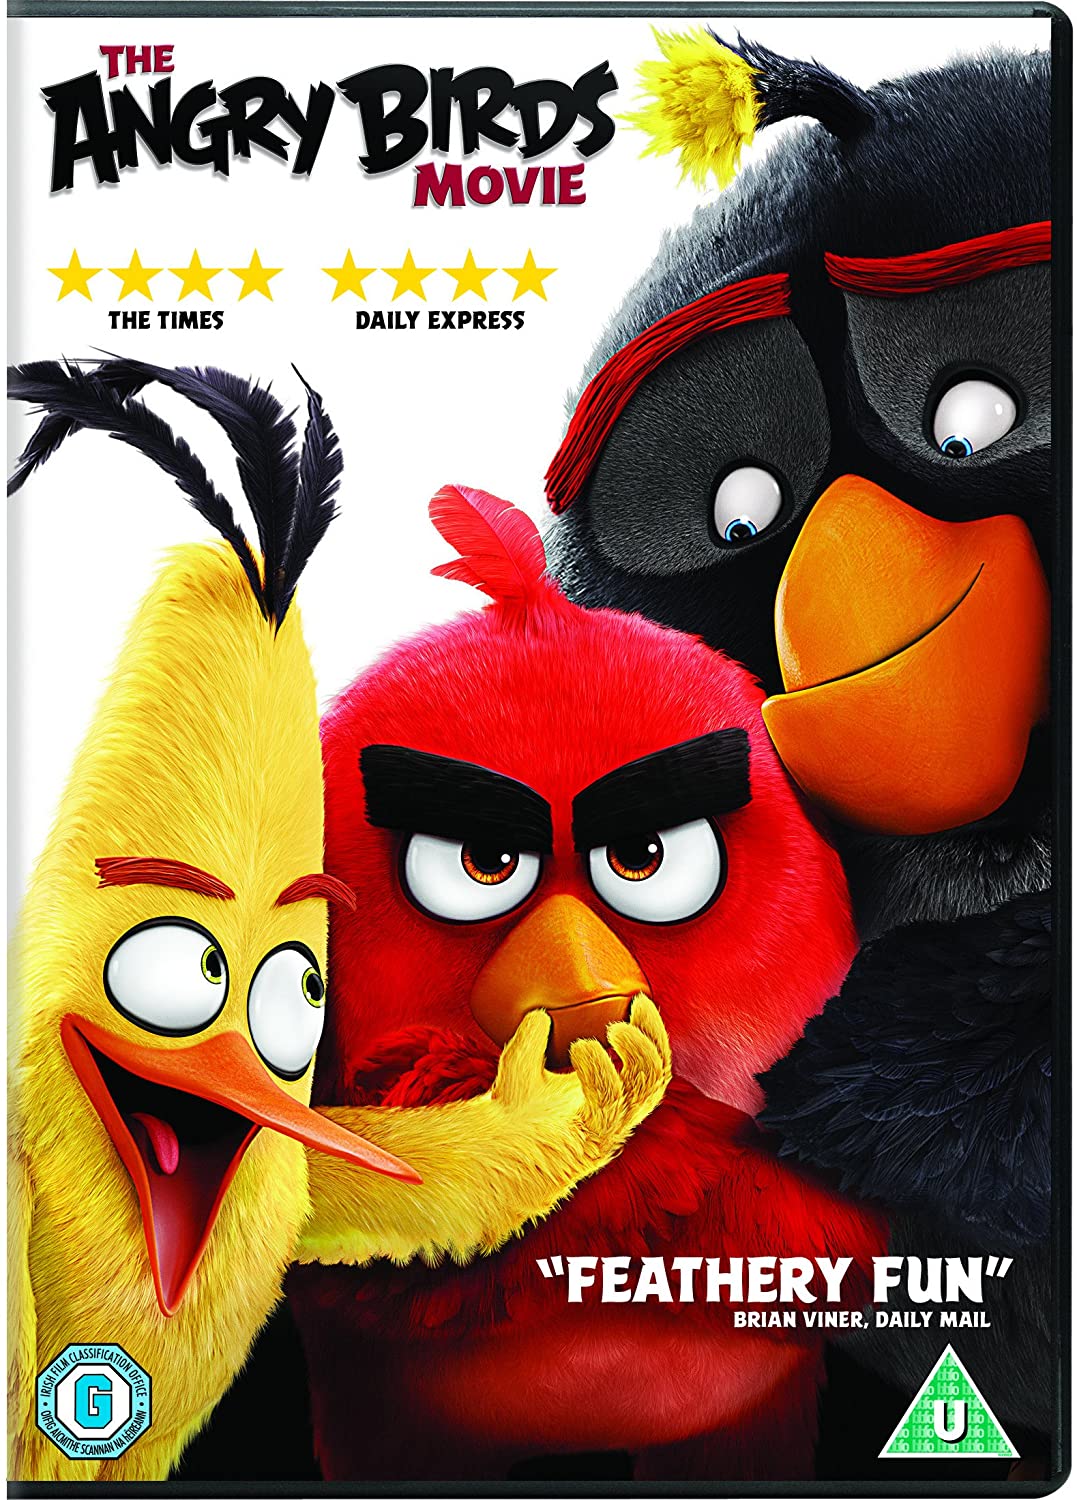 The Angry Birds Movie [2016] - Family/Comedy [DVD]